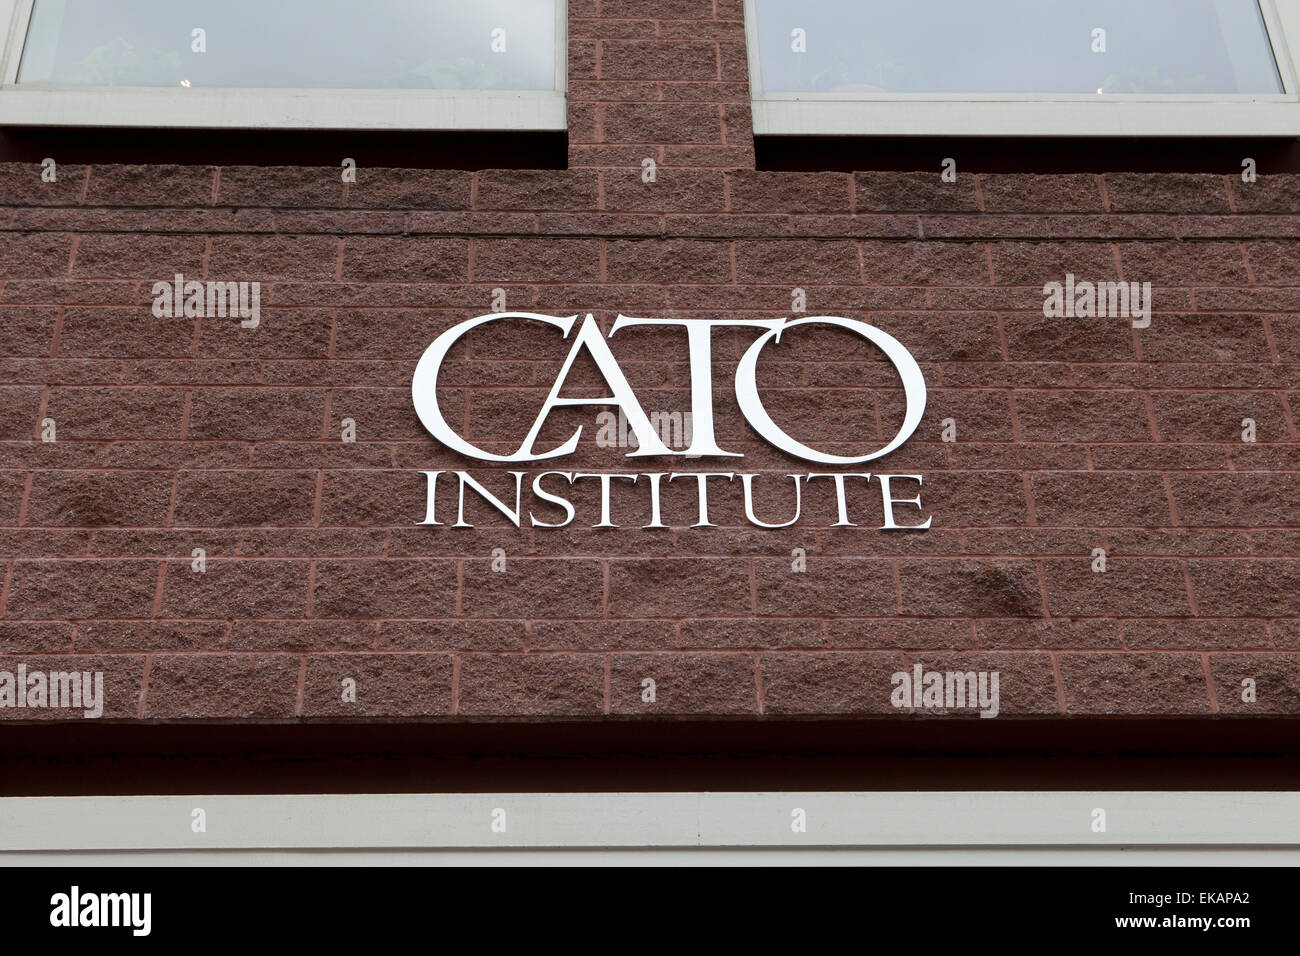 CATO Institute - Washington, DC USA Stock Photo